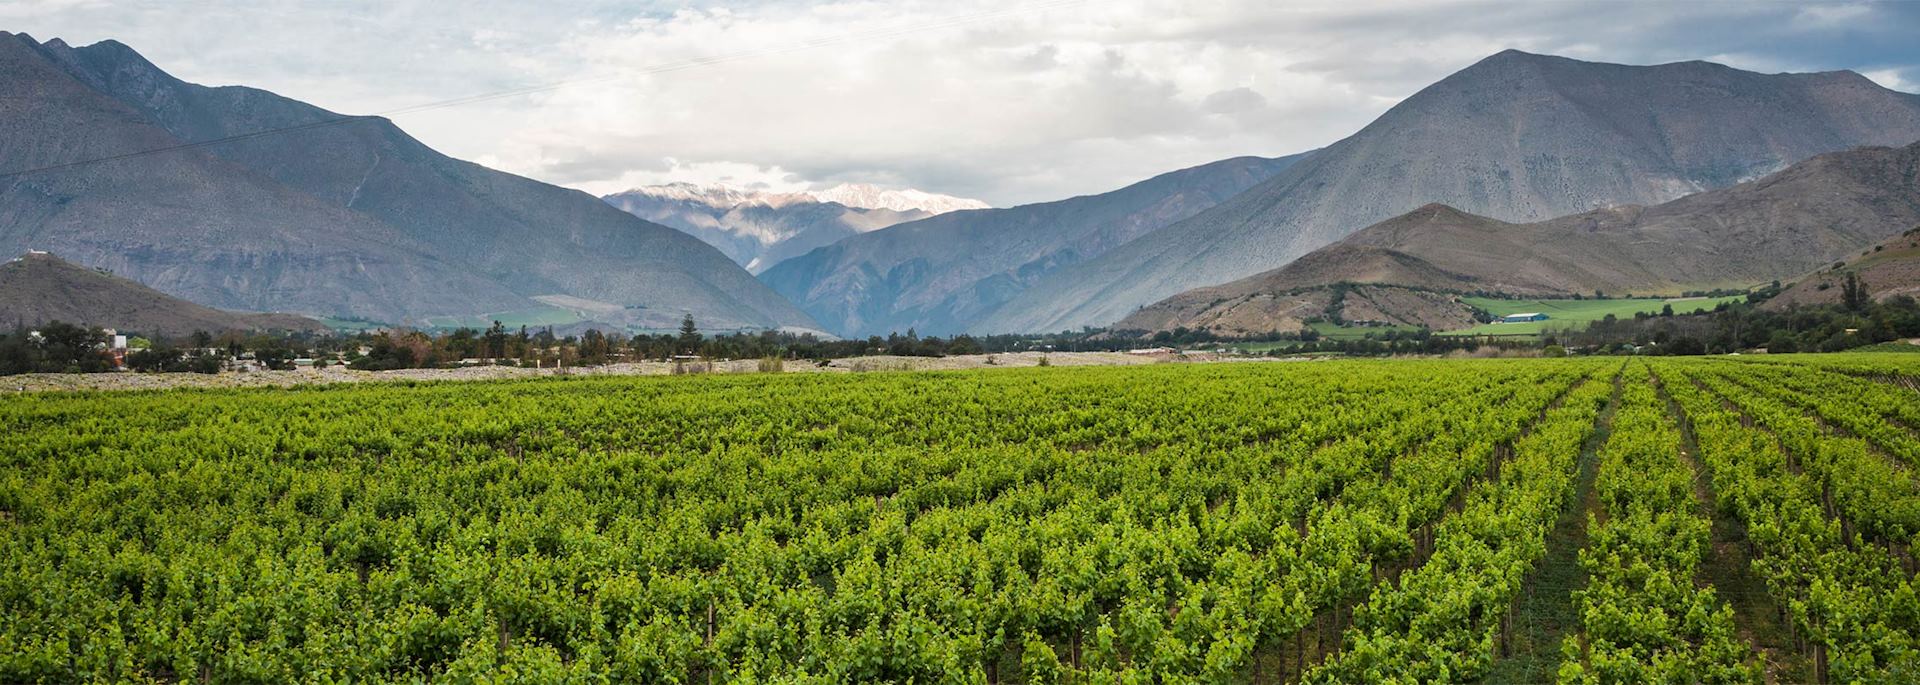 Elqui Valley vineyard